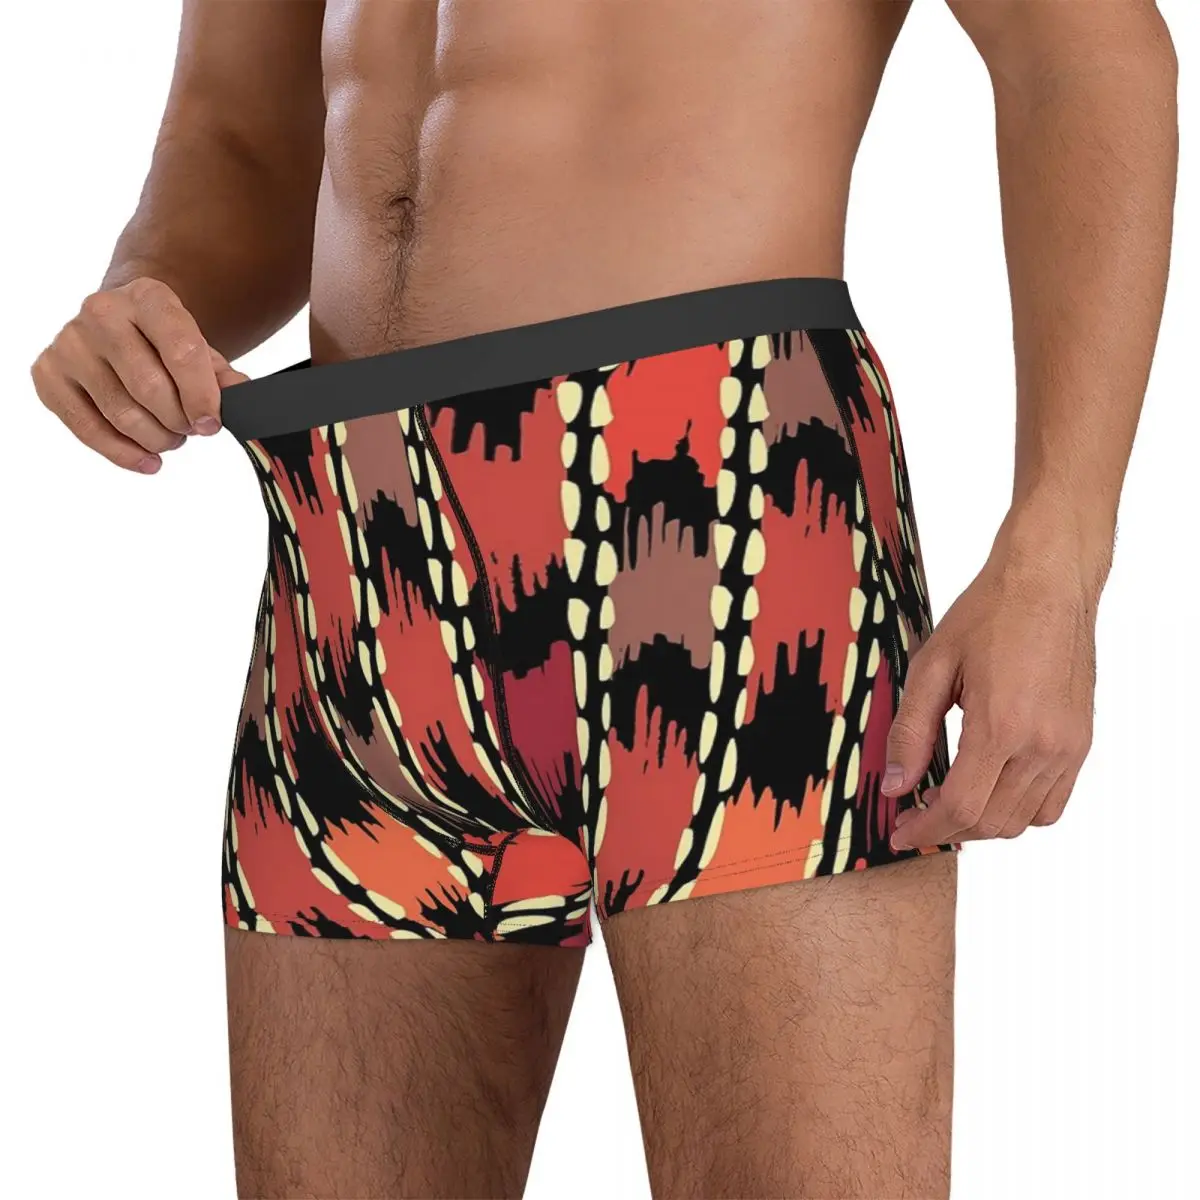 https://ae01.alicdn.com/kf/S9fc3394c637a4d38a4647146b3a51c2fZ/Boxer-Underpants-Shorts-Southwestern-Native-American-Panties-Male-Breathable-Underwear-for-Homme-Man-Boyfriend-Gift.jpg